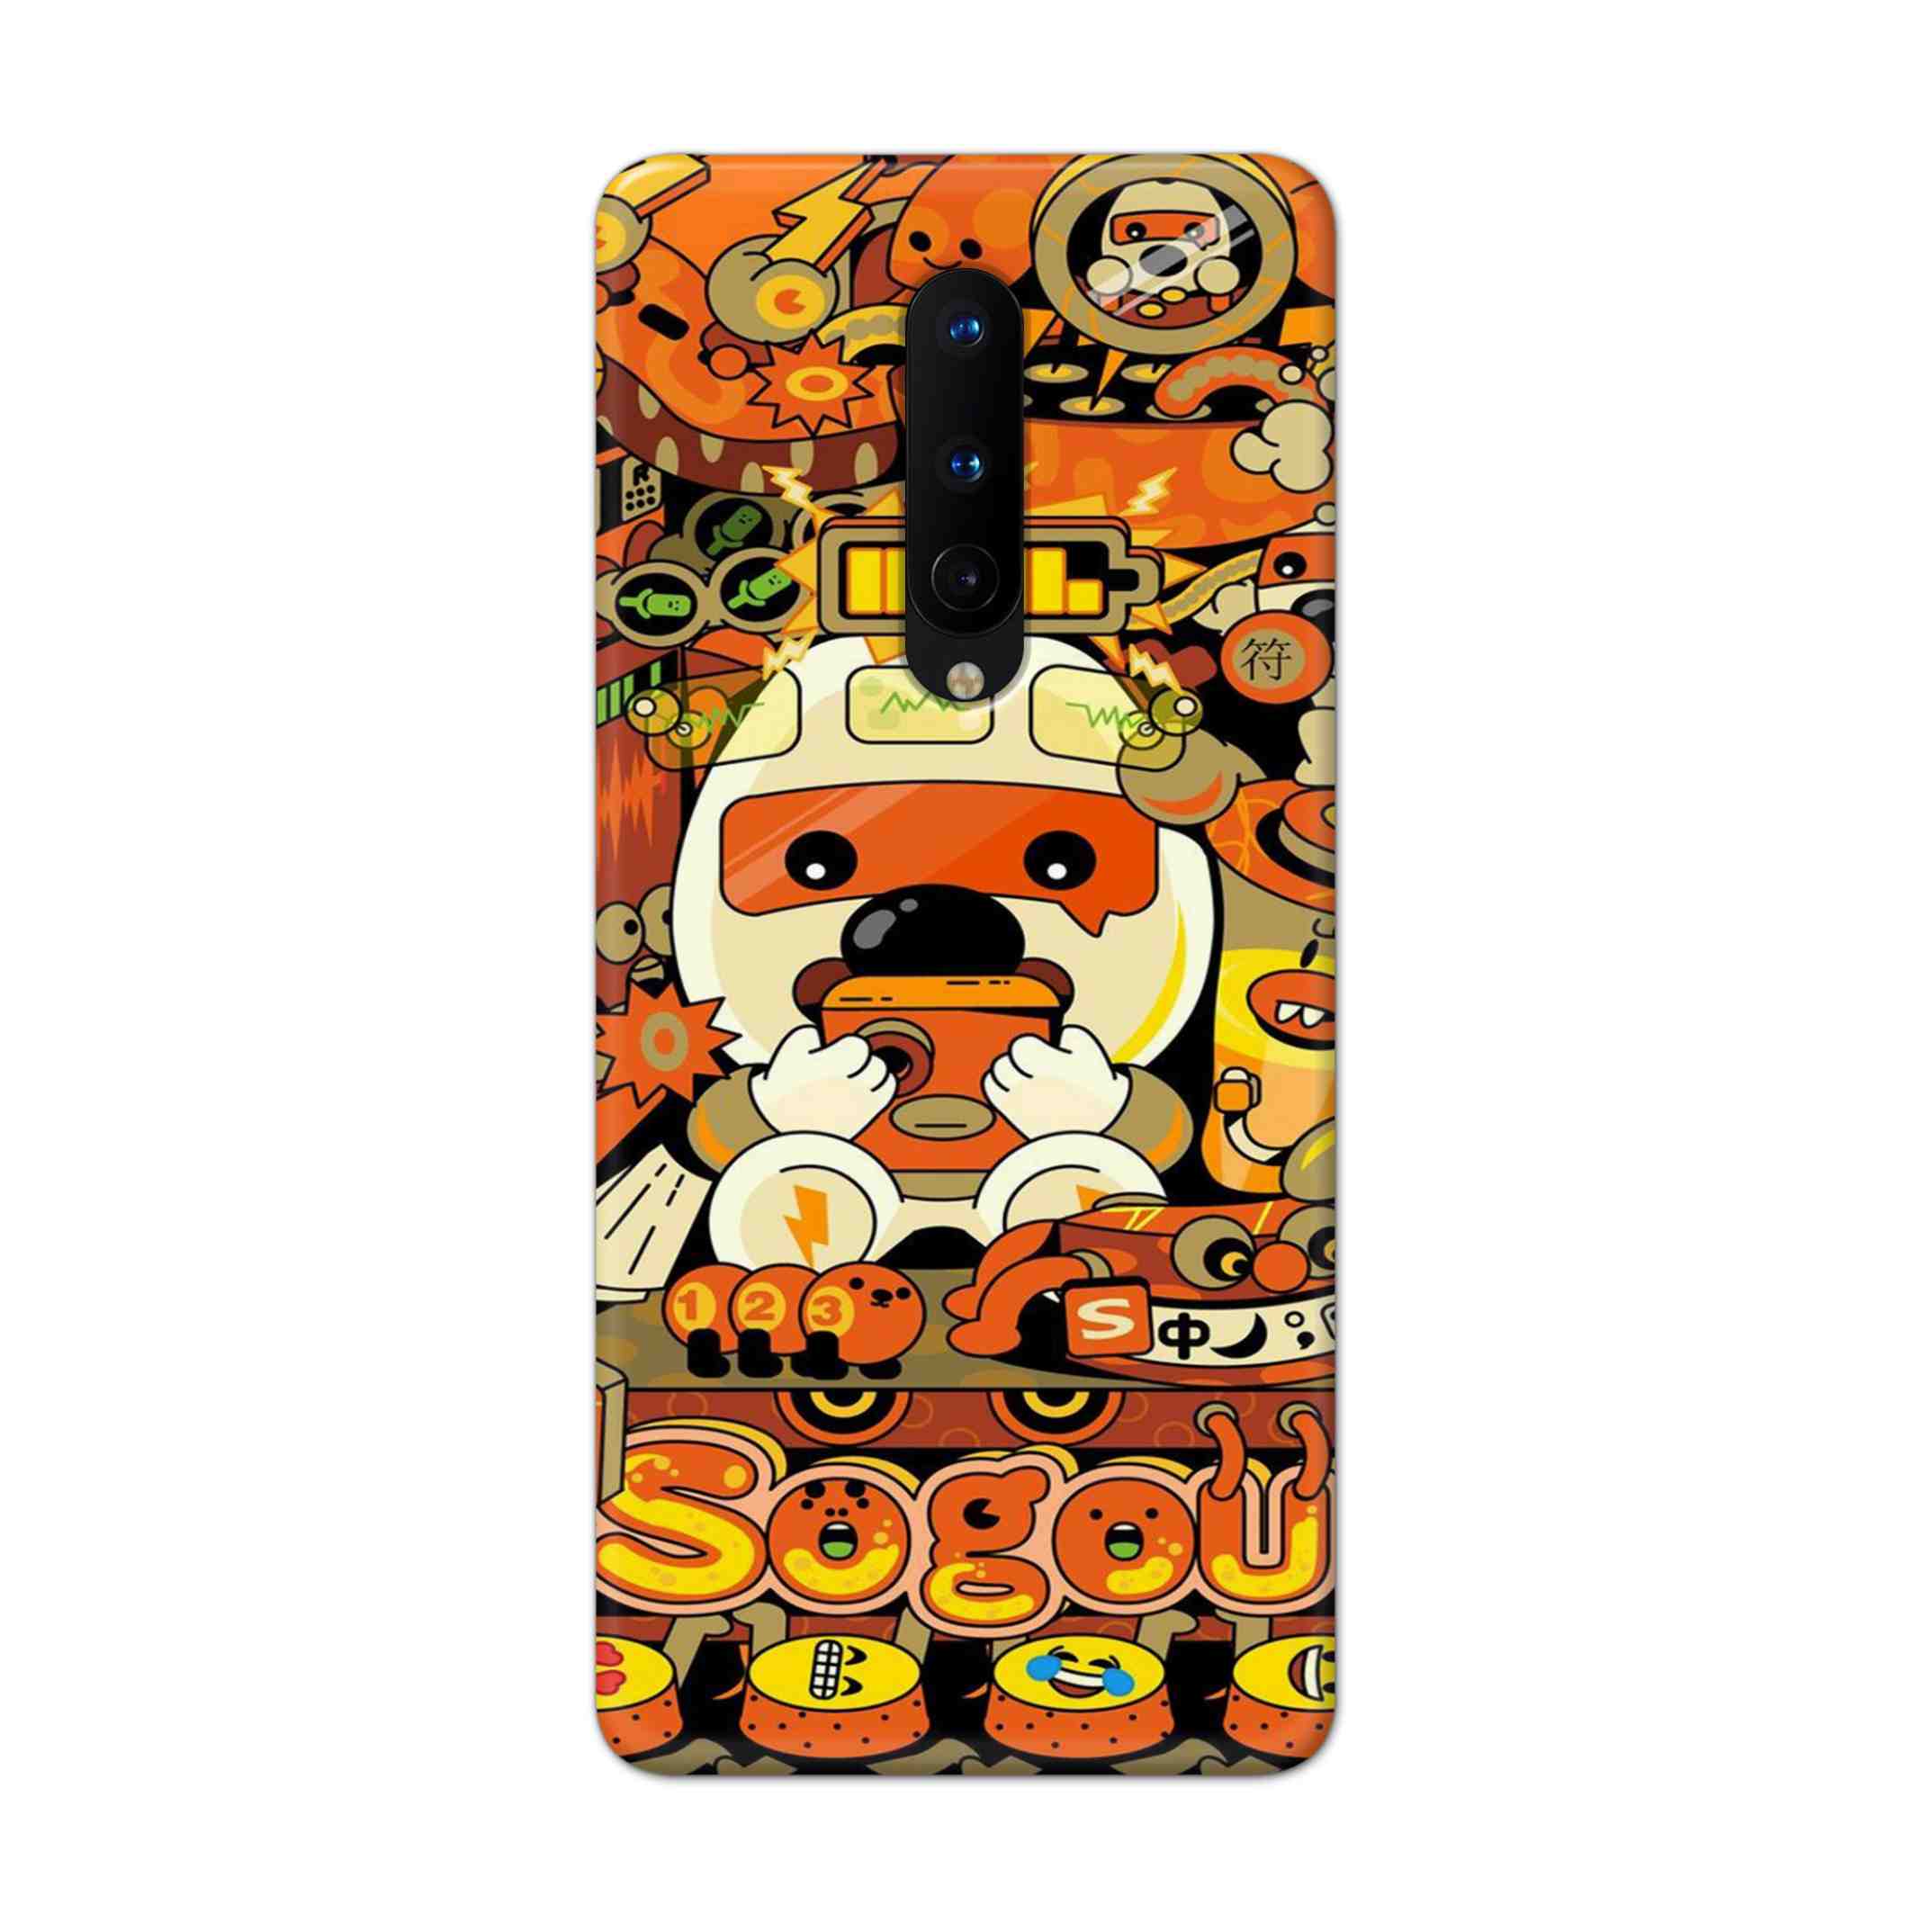 Buy Sogou Hard Back Mobile Phone Case Cover For OnePlus 8 Online